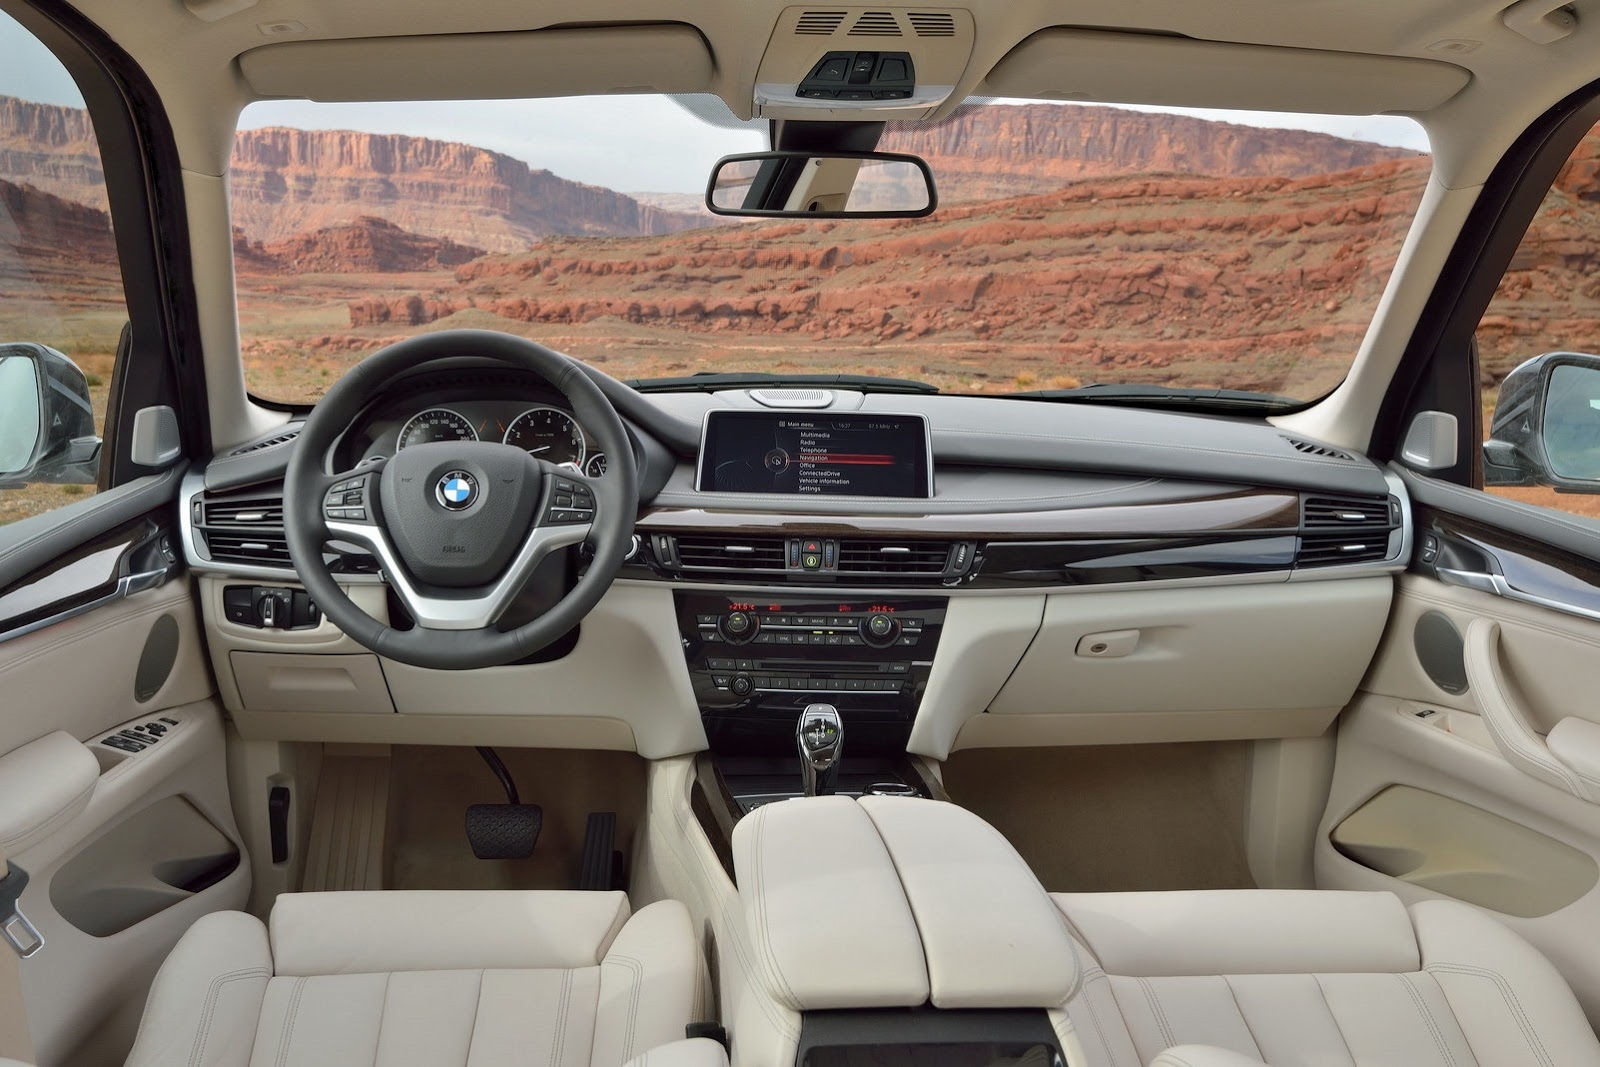 BMW X5 Series 3rd (F15) Generation Interior Dashboard